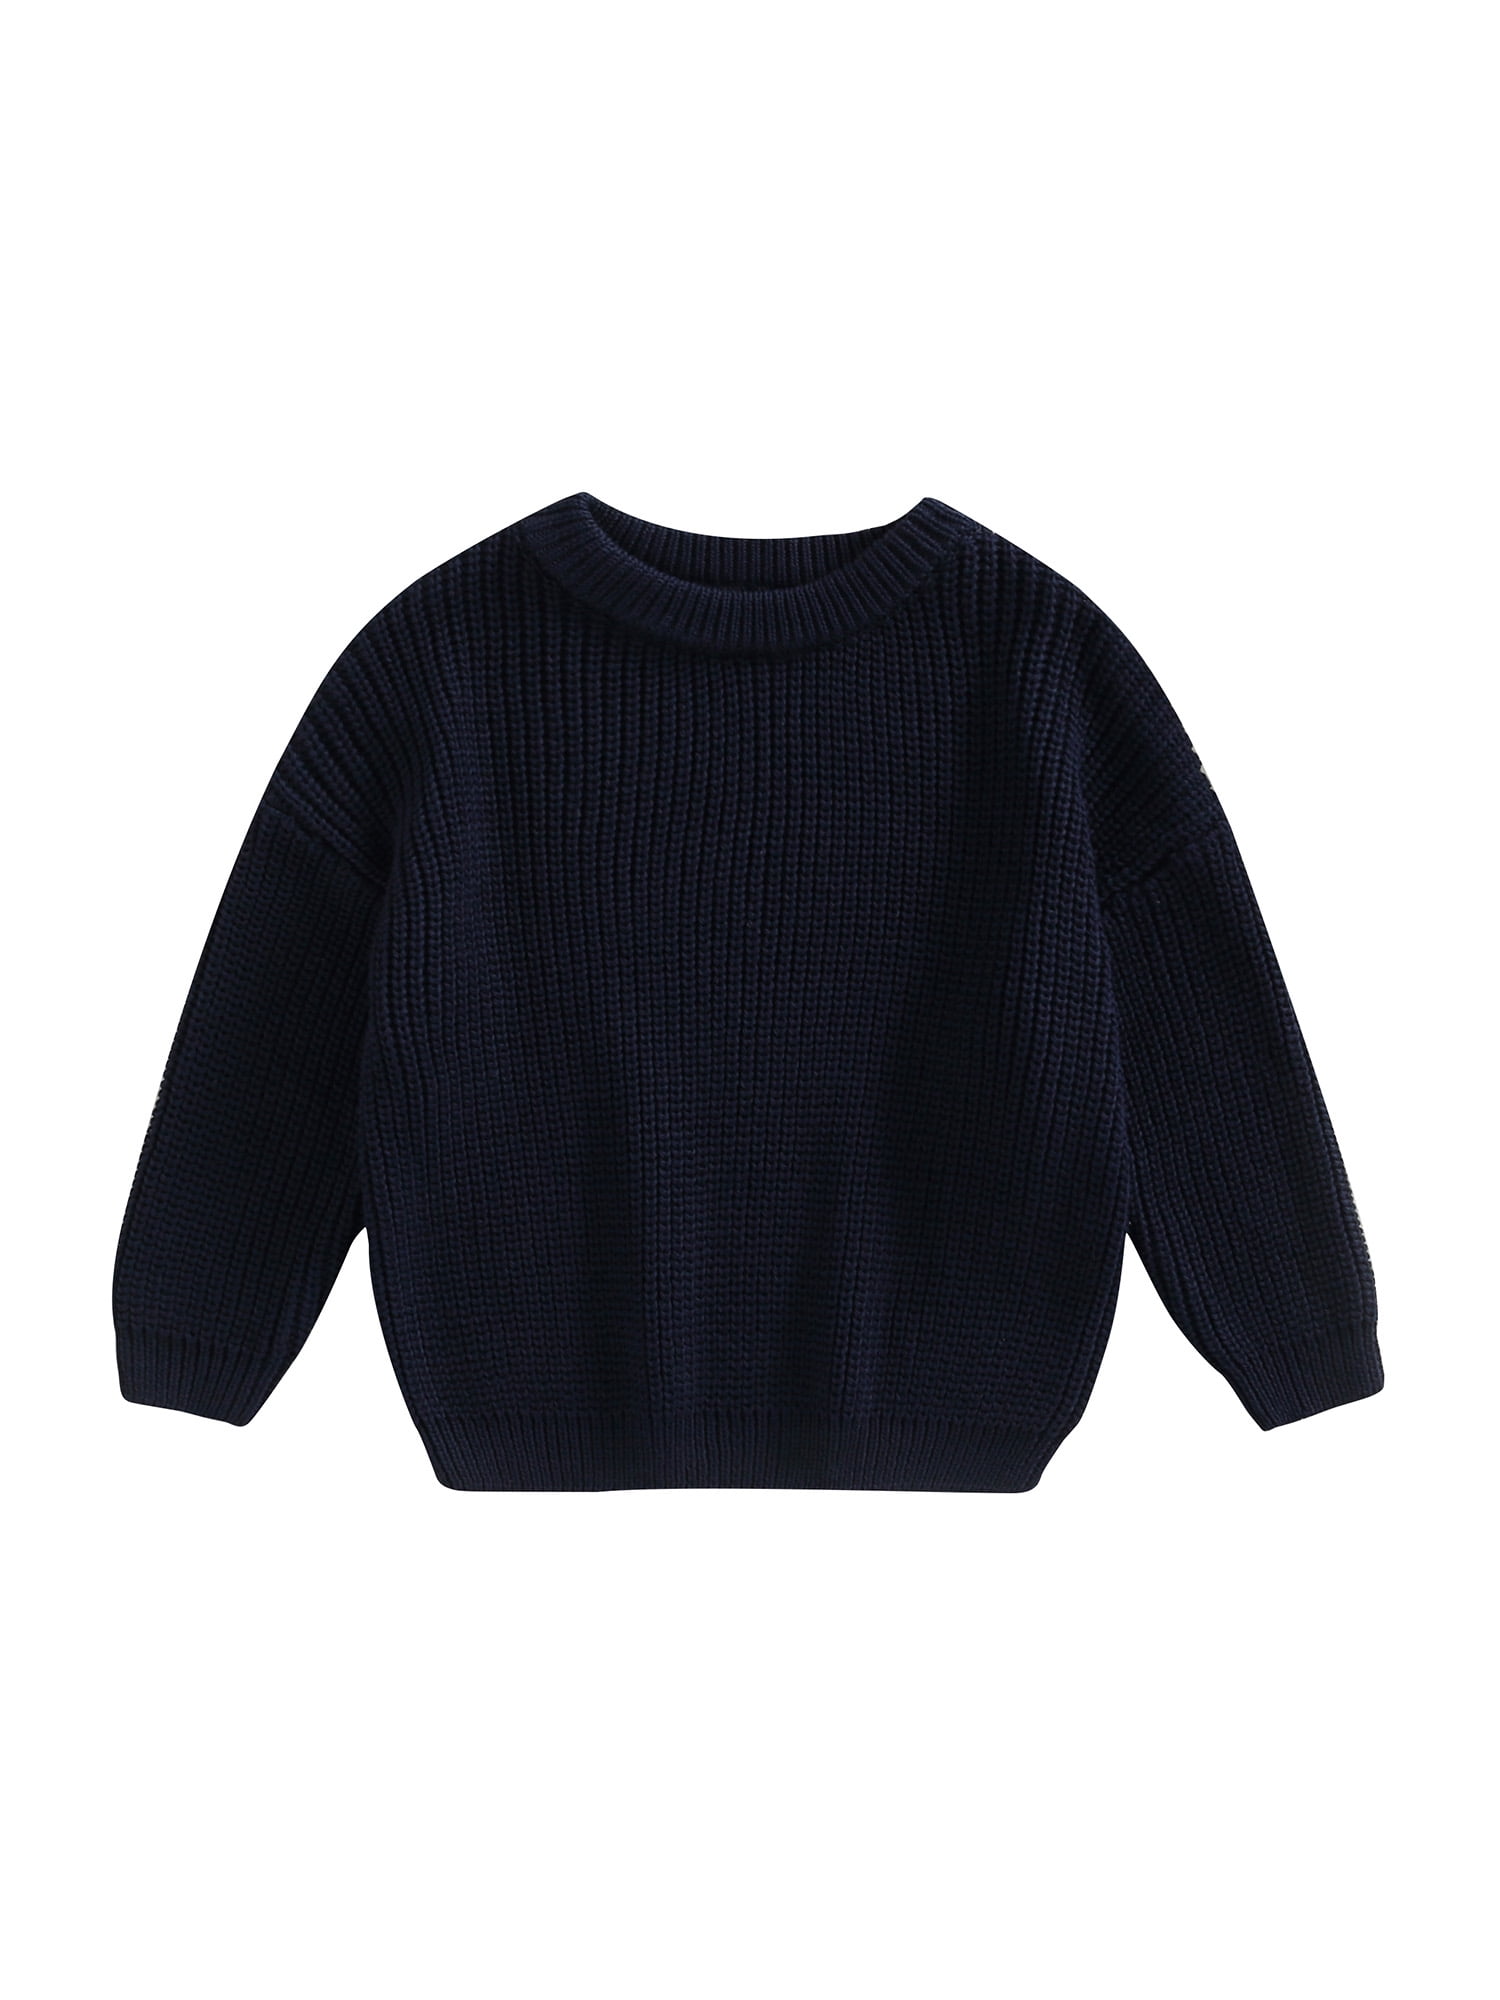 Ñaco jumper Navy Blue 3Y discount 73% KIDS FASHION Jumpers & Sweatshirts Knitted 